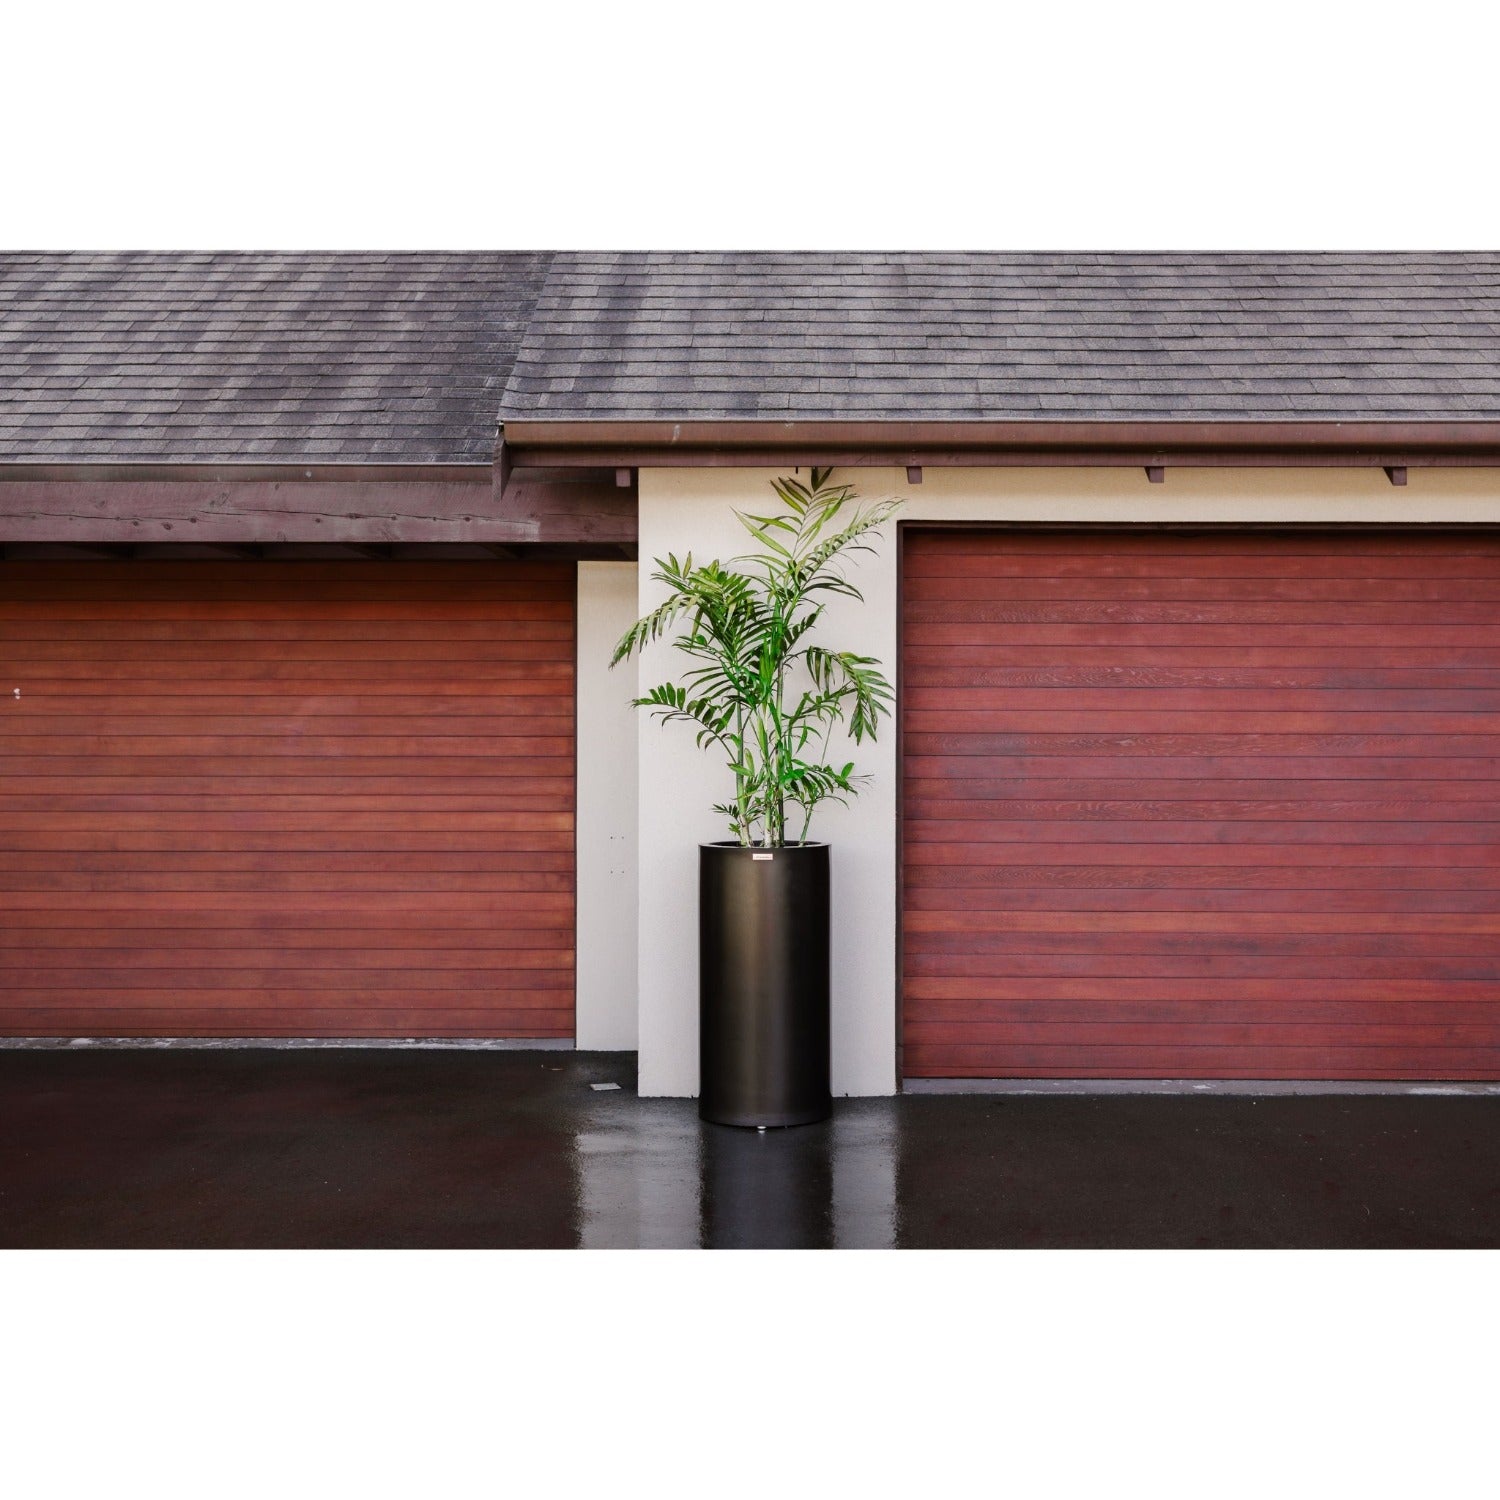 A large black Modscene cylinder planter in front of a house.